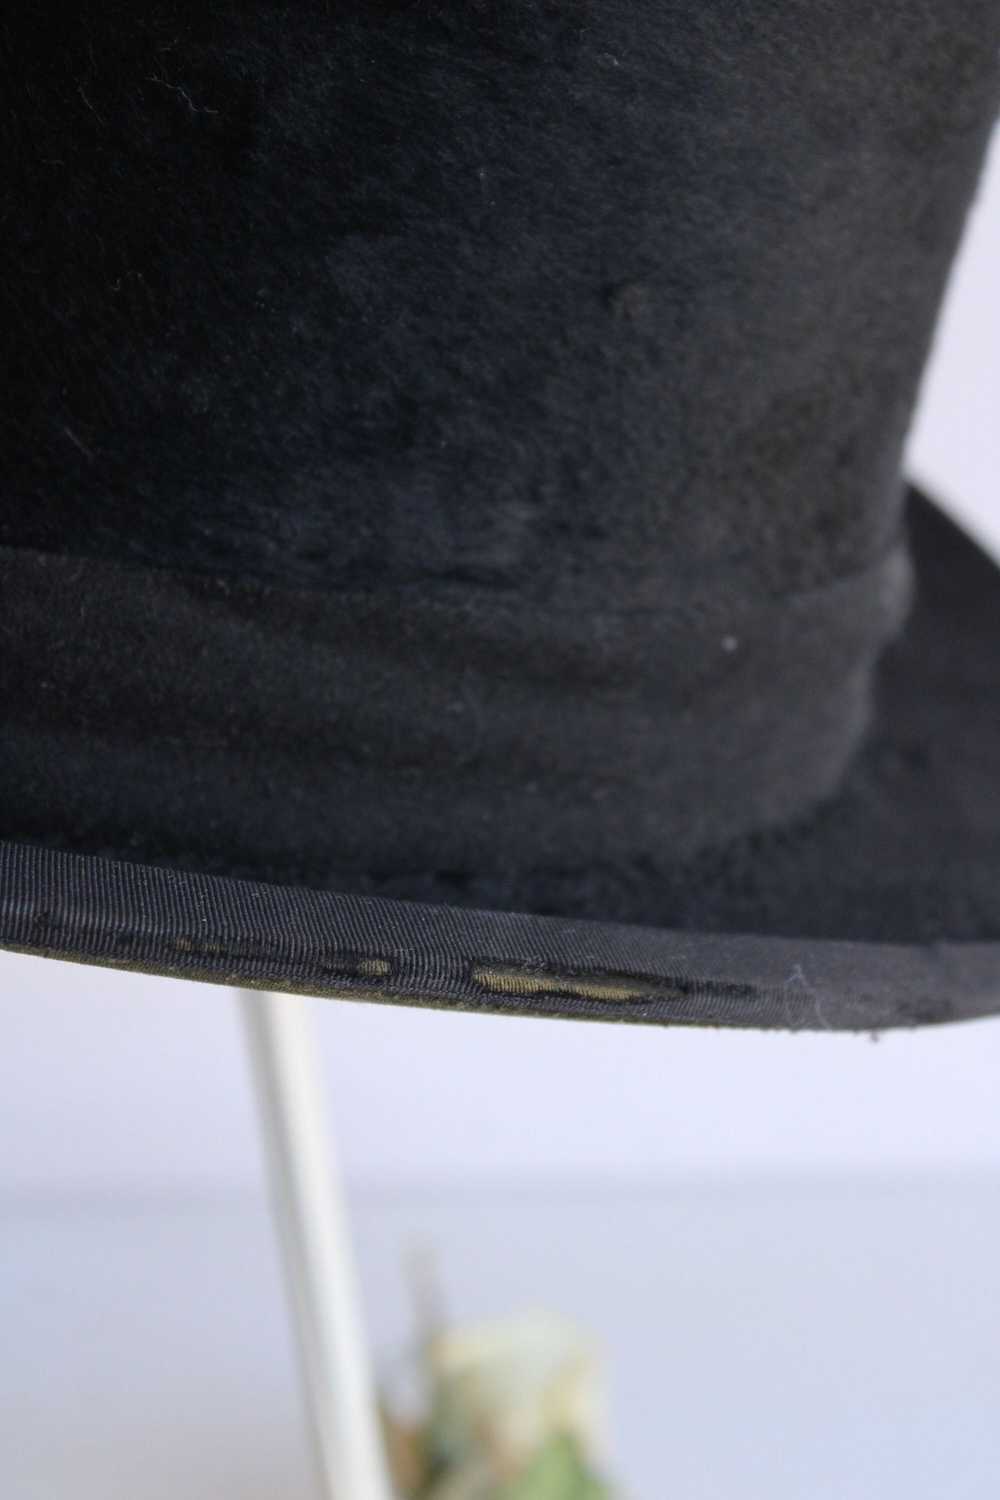 Antique Vintage Antique 1800s Top Hat, Black Beav… - image 5